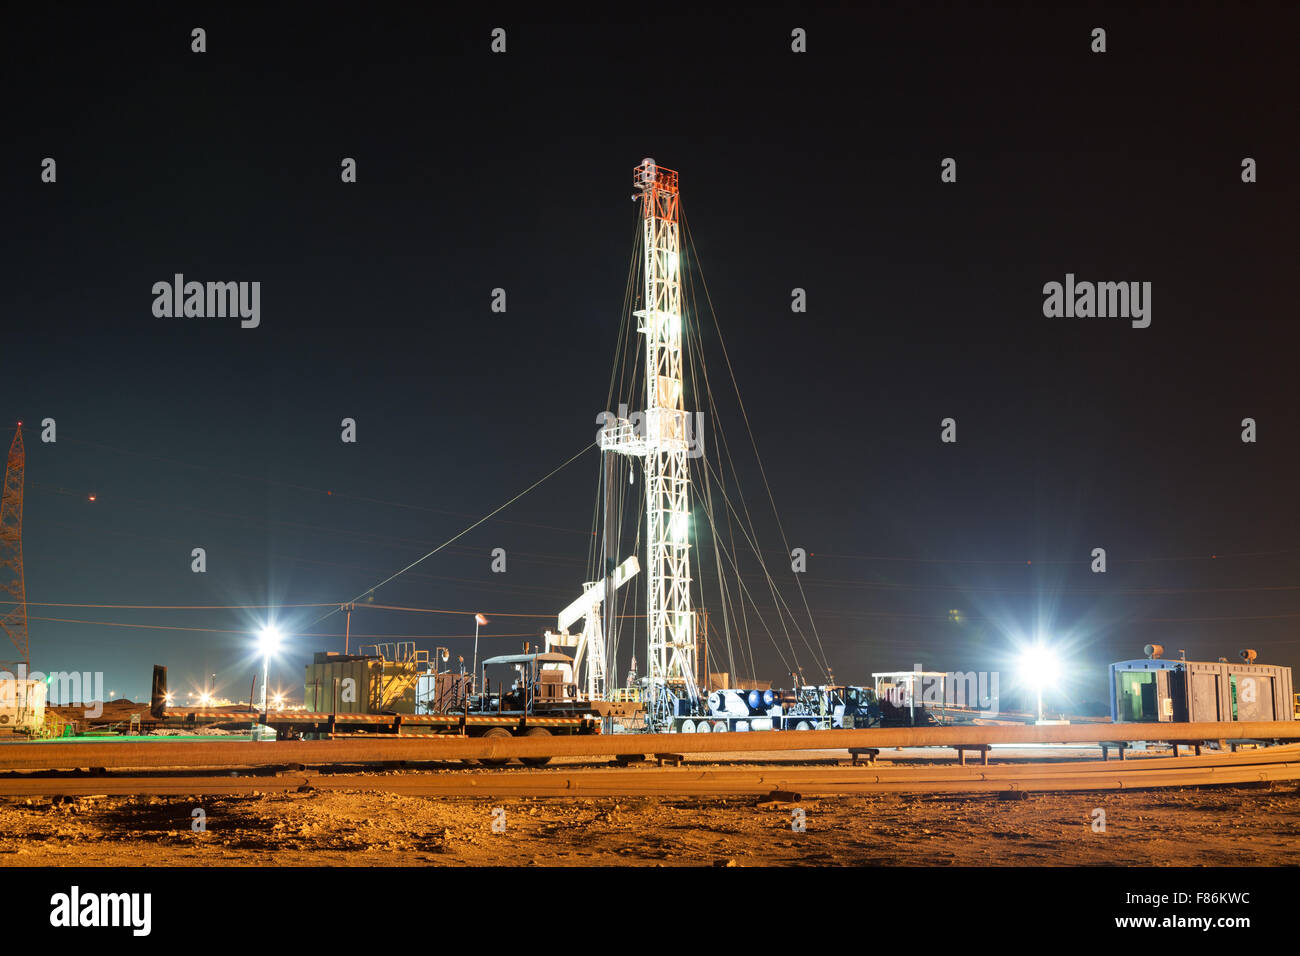 Oil drill machinery bright illuminated at night Stock Photo